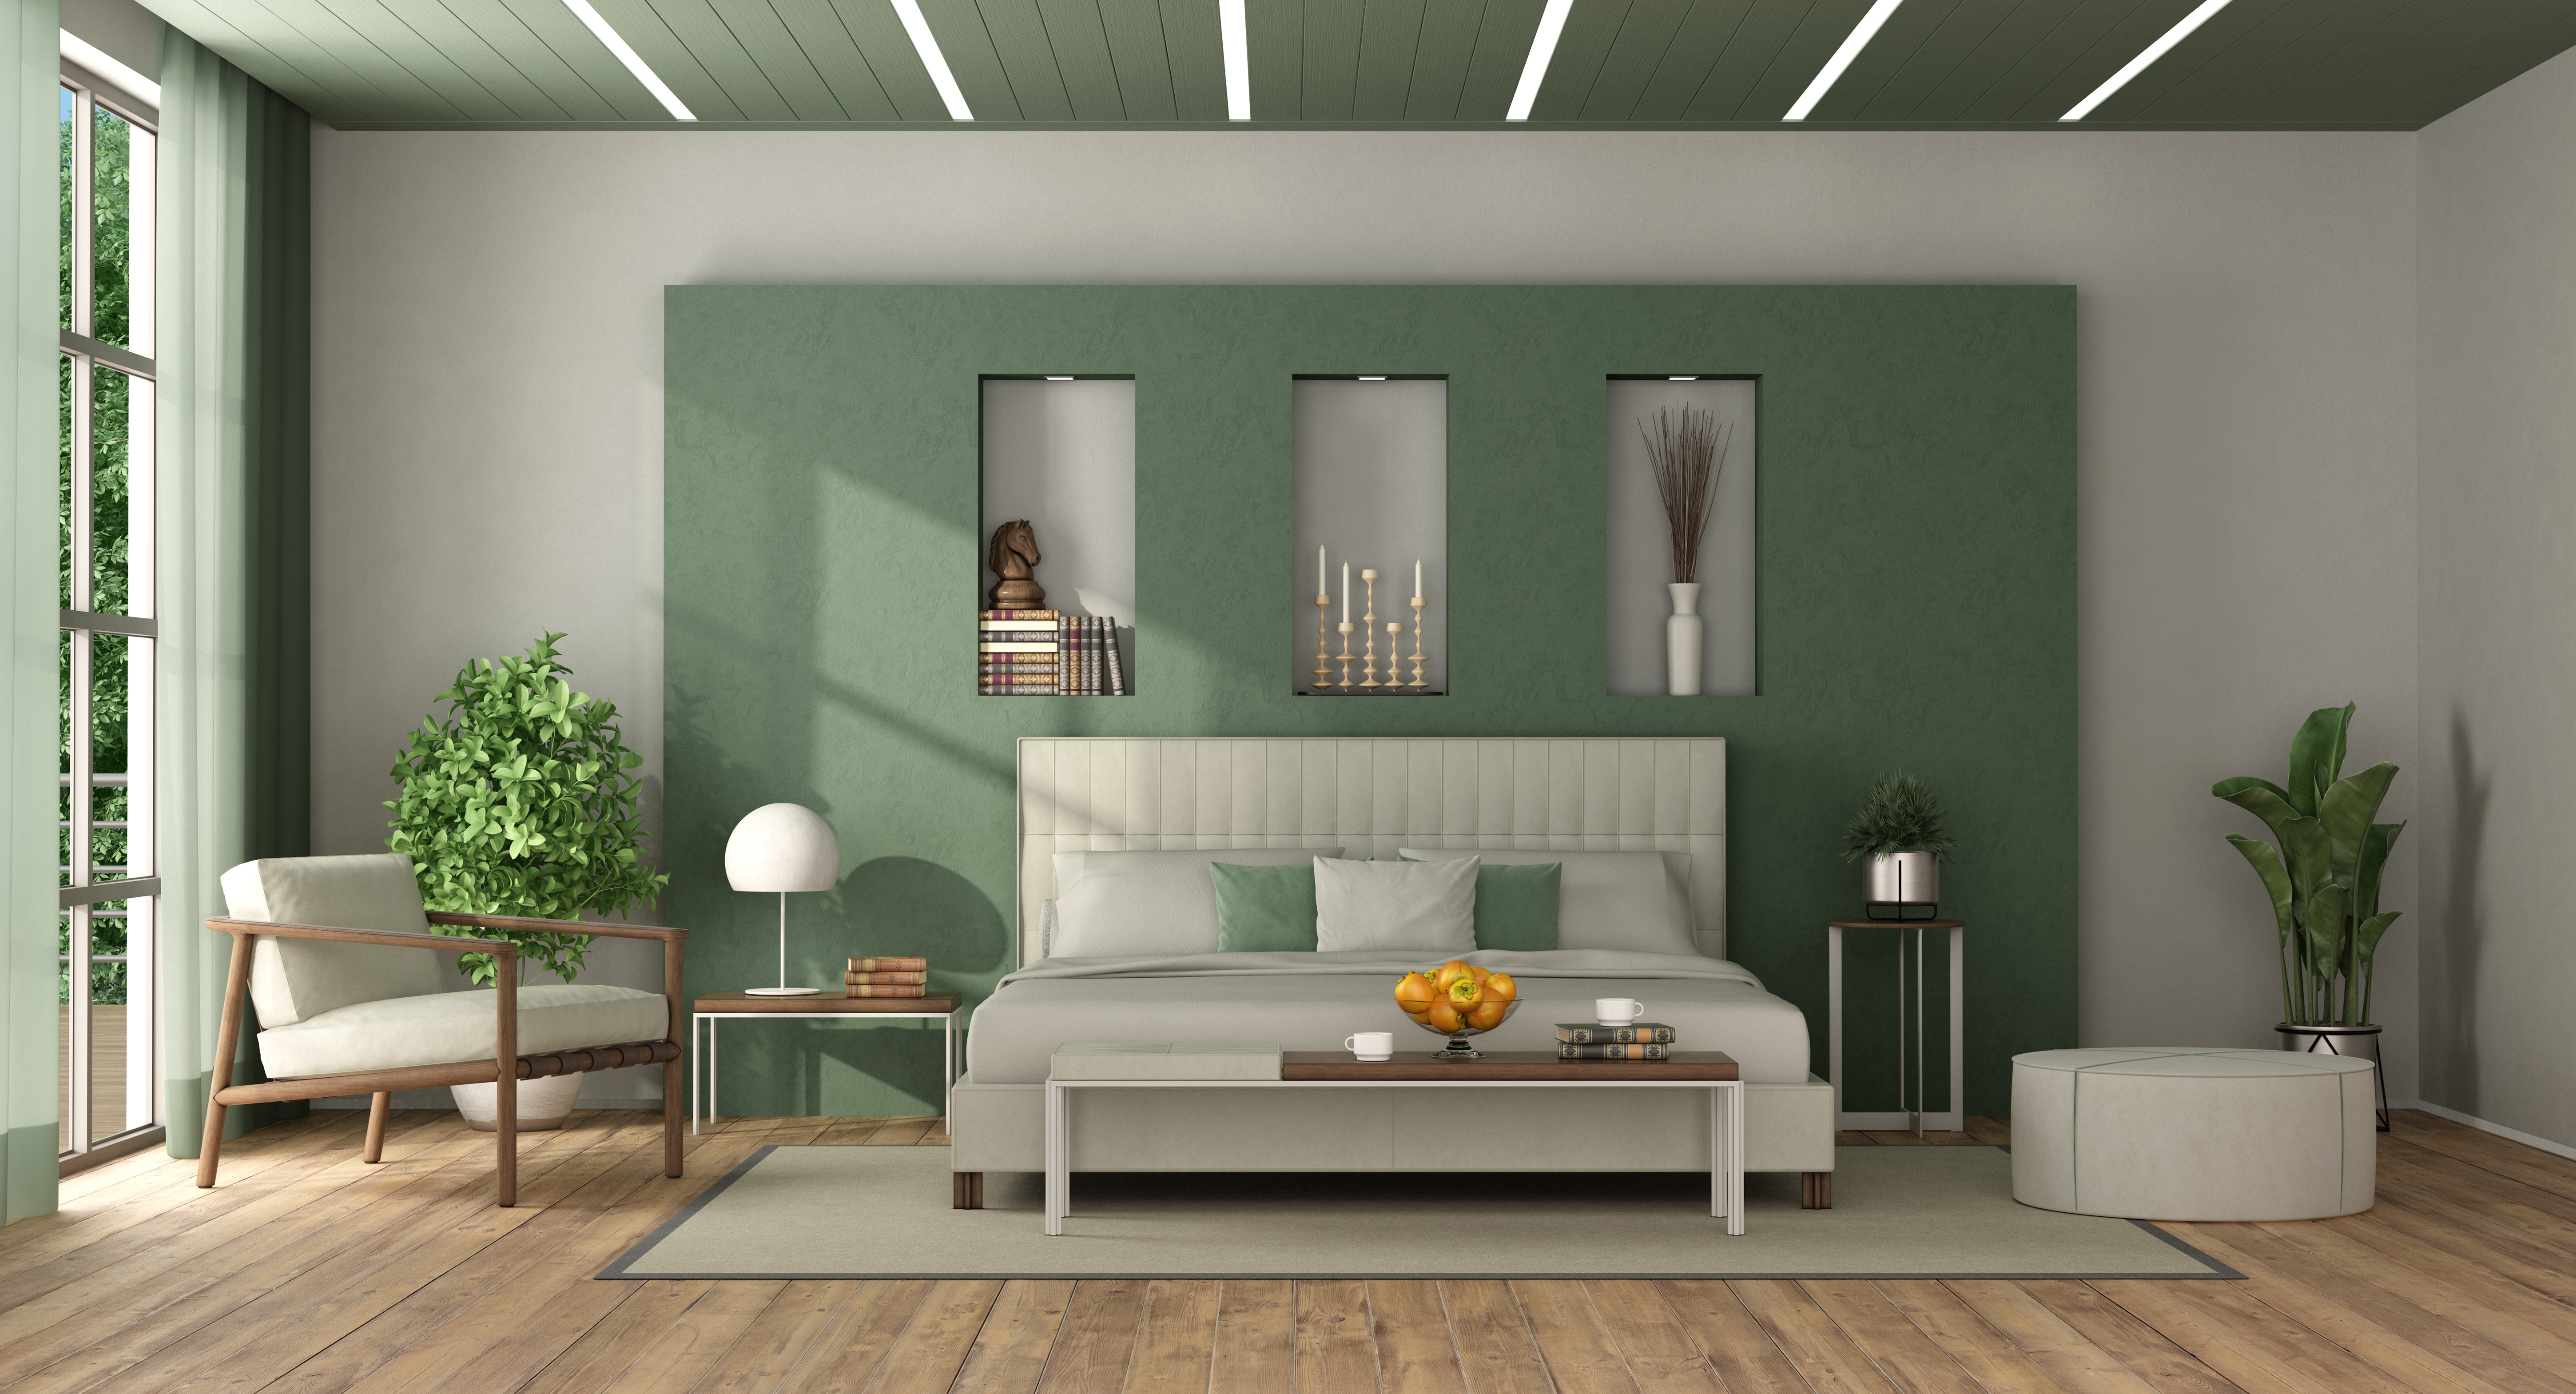 Discount Platform Bed Furniture And Design Ideas